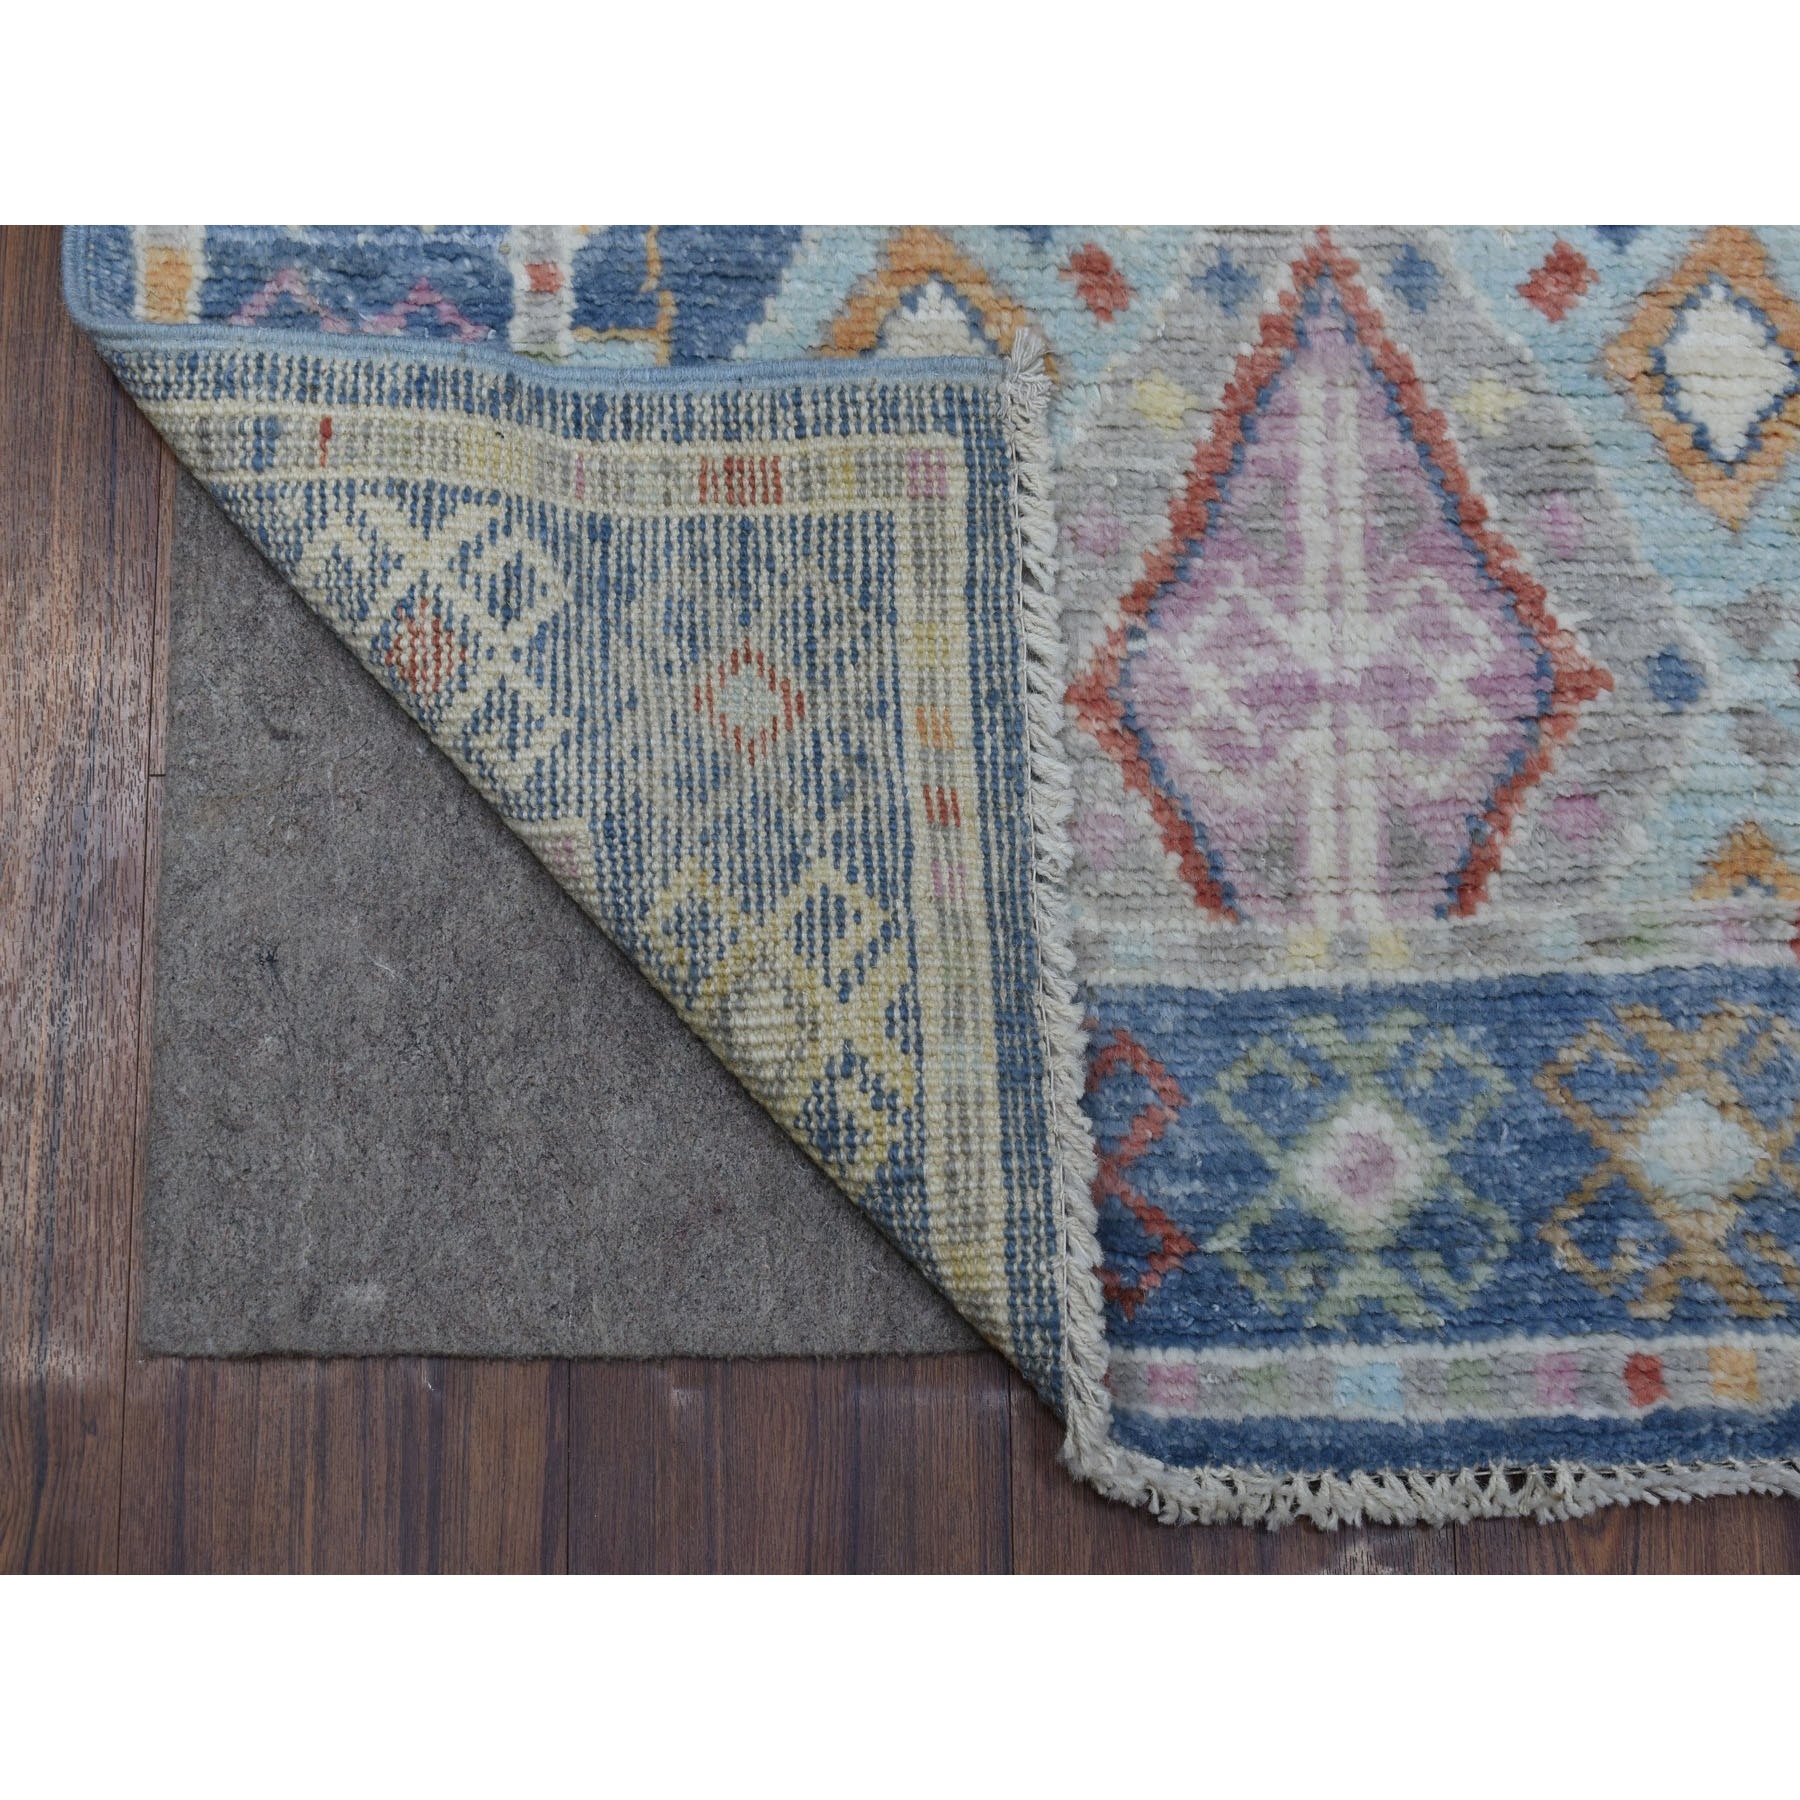 3'x12' Hand Woven Denim Blue Geometric Anatolian Village Inspired Angora Oushak Organic Wool Wide Runner Oriental Rug 